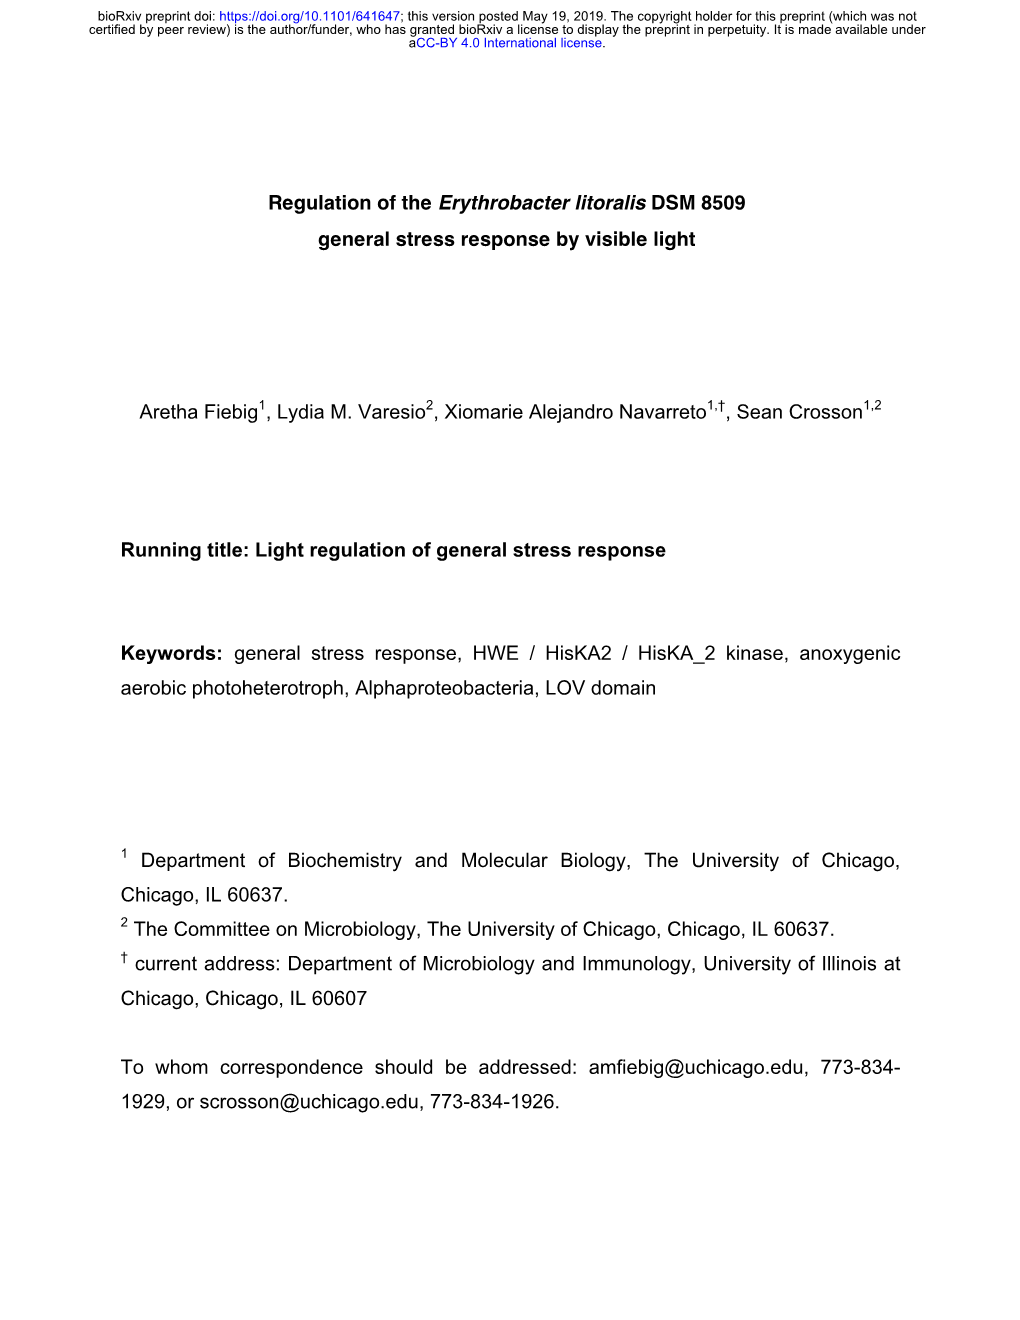 Regulation of the Erythrobacter Litoralis DSM 8509 General Stress Response by Visible Light